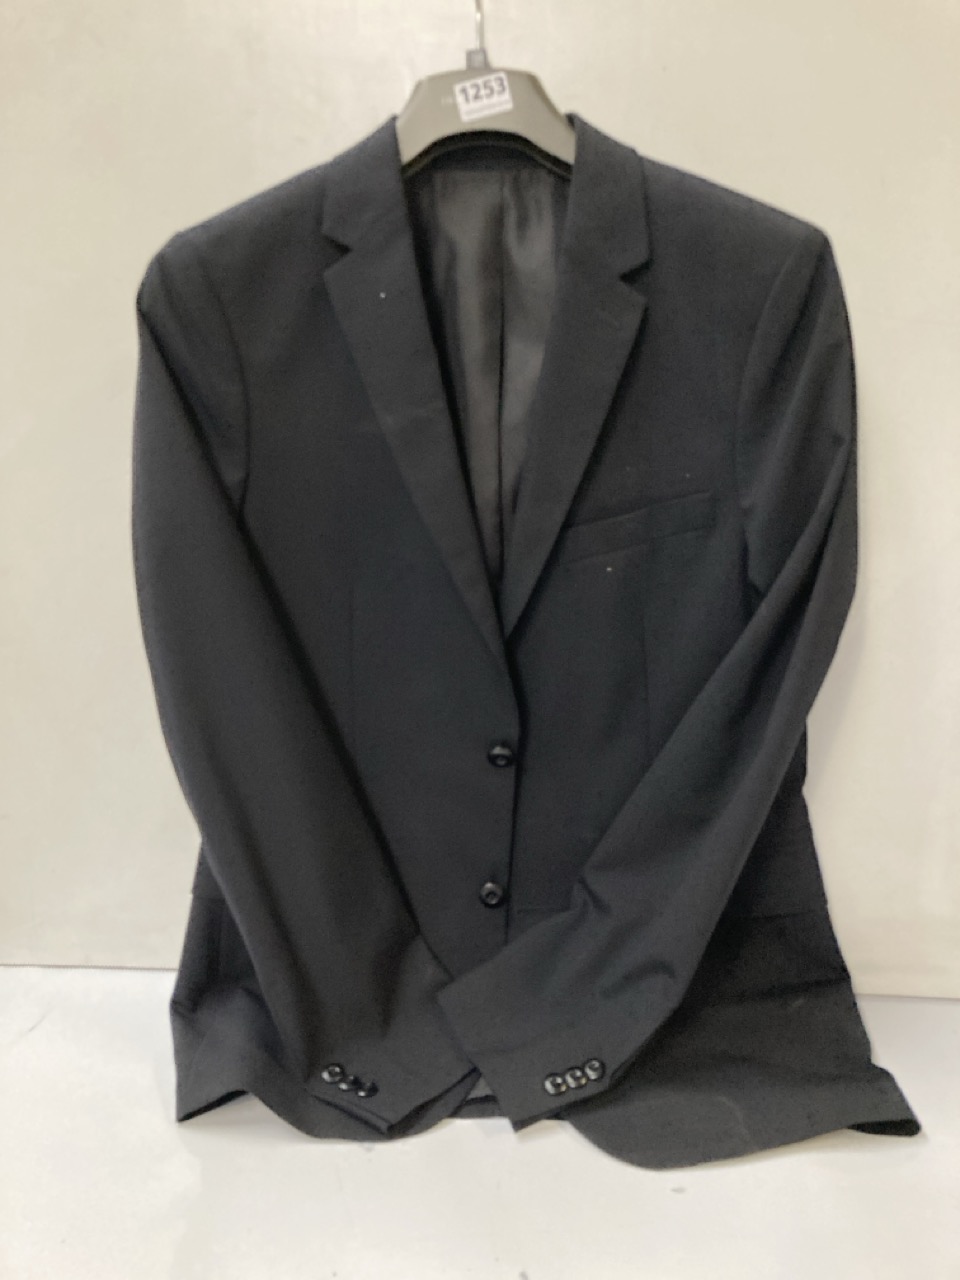 ASSORTMENT OF MEN'S CLOTHING TO INCLUDE JOHN LEWIS SLIM BLACK SUIT JACKET 38R